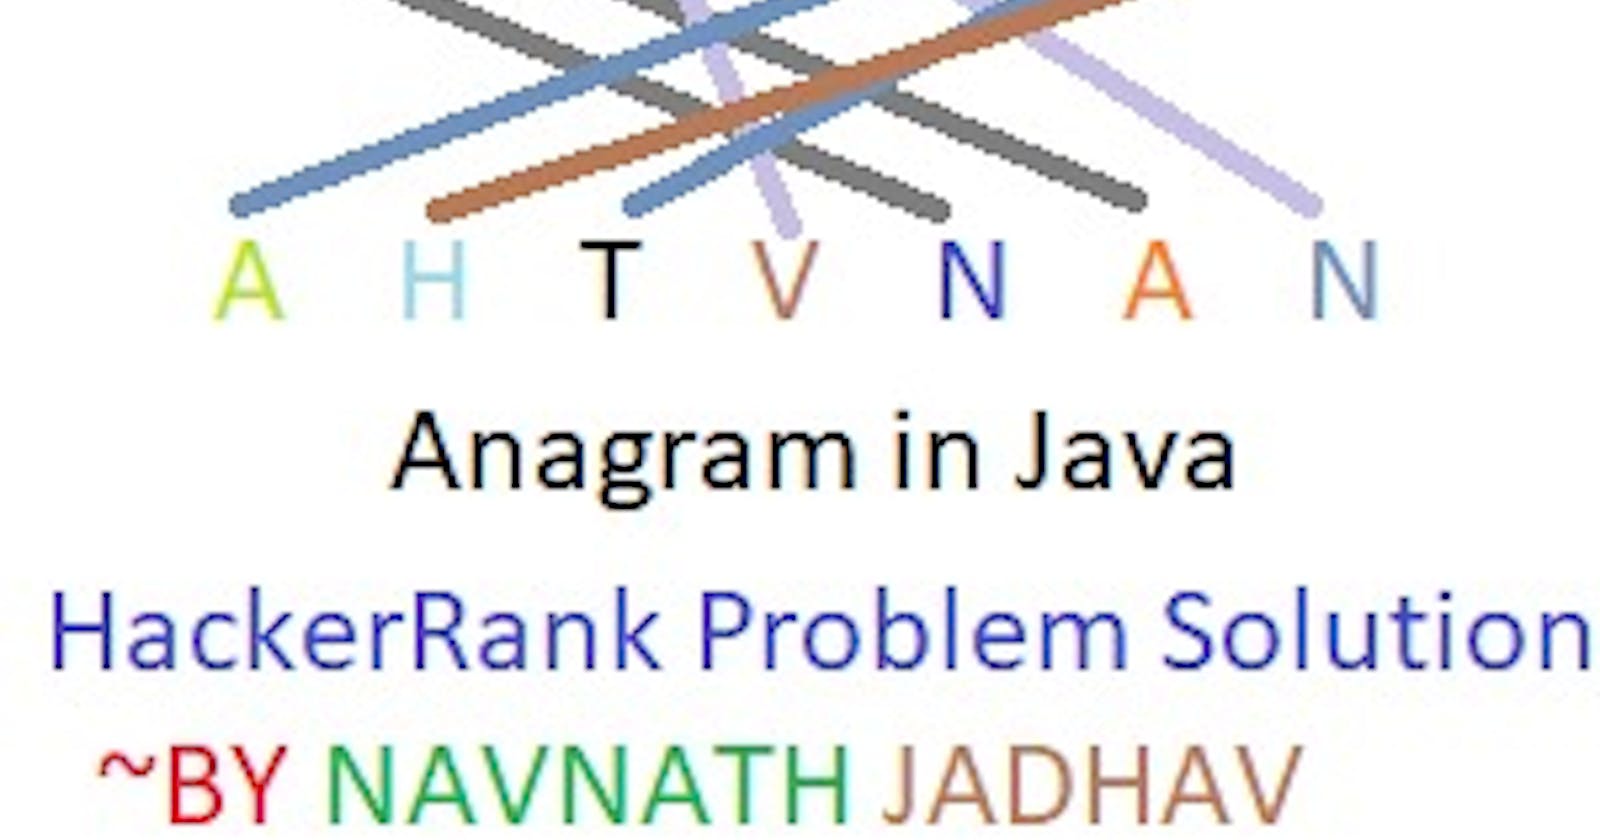 Java Anagram: HackerRank Problem Solution in Java